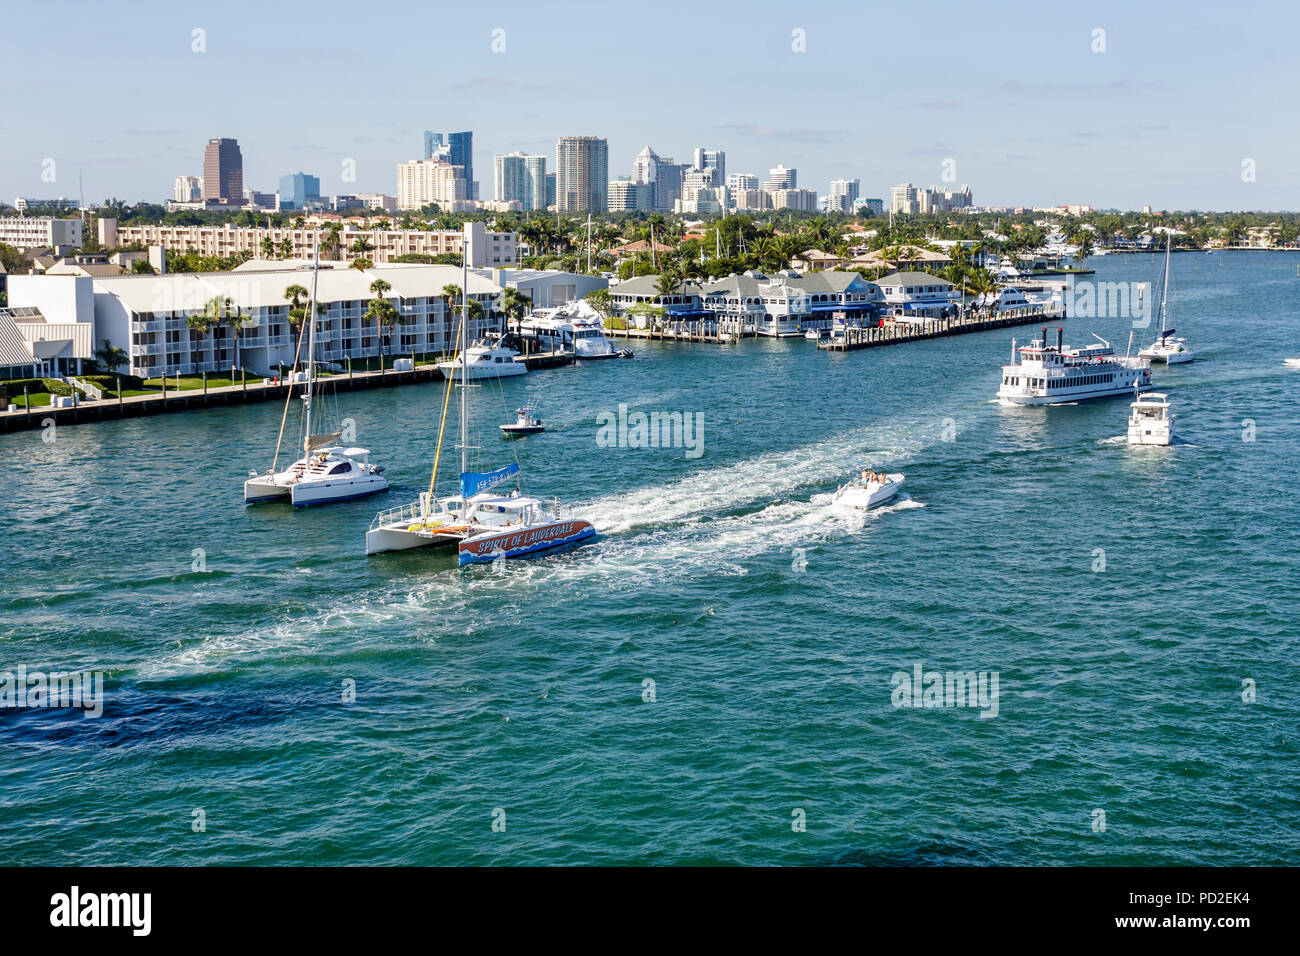 Ft. Fort Lauderdale Florida,Intracoastal catamaran,sailboat,motor boat,watercraft,downtown skyline,marine traffic,waterfront,buildings,city skyline,wa Stock Photo